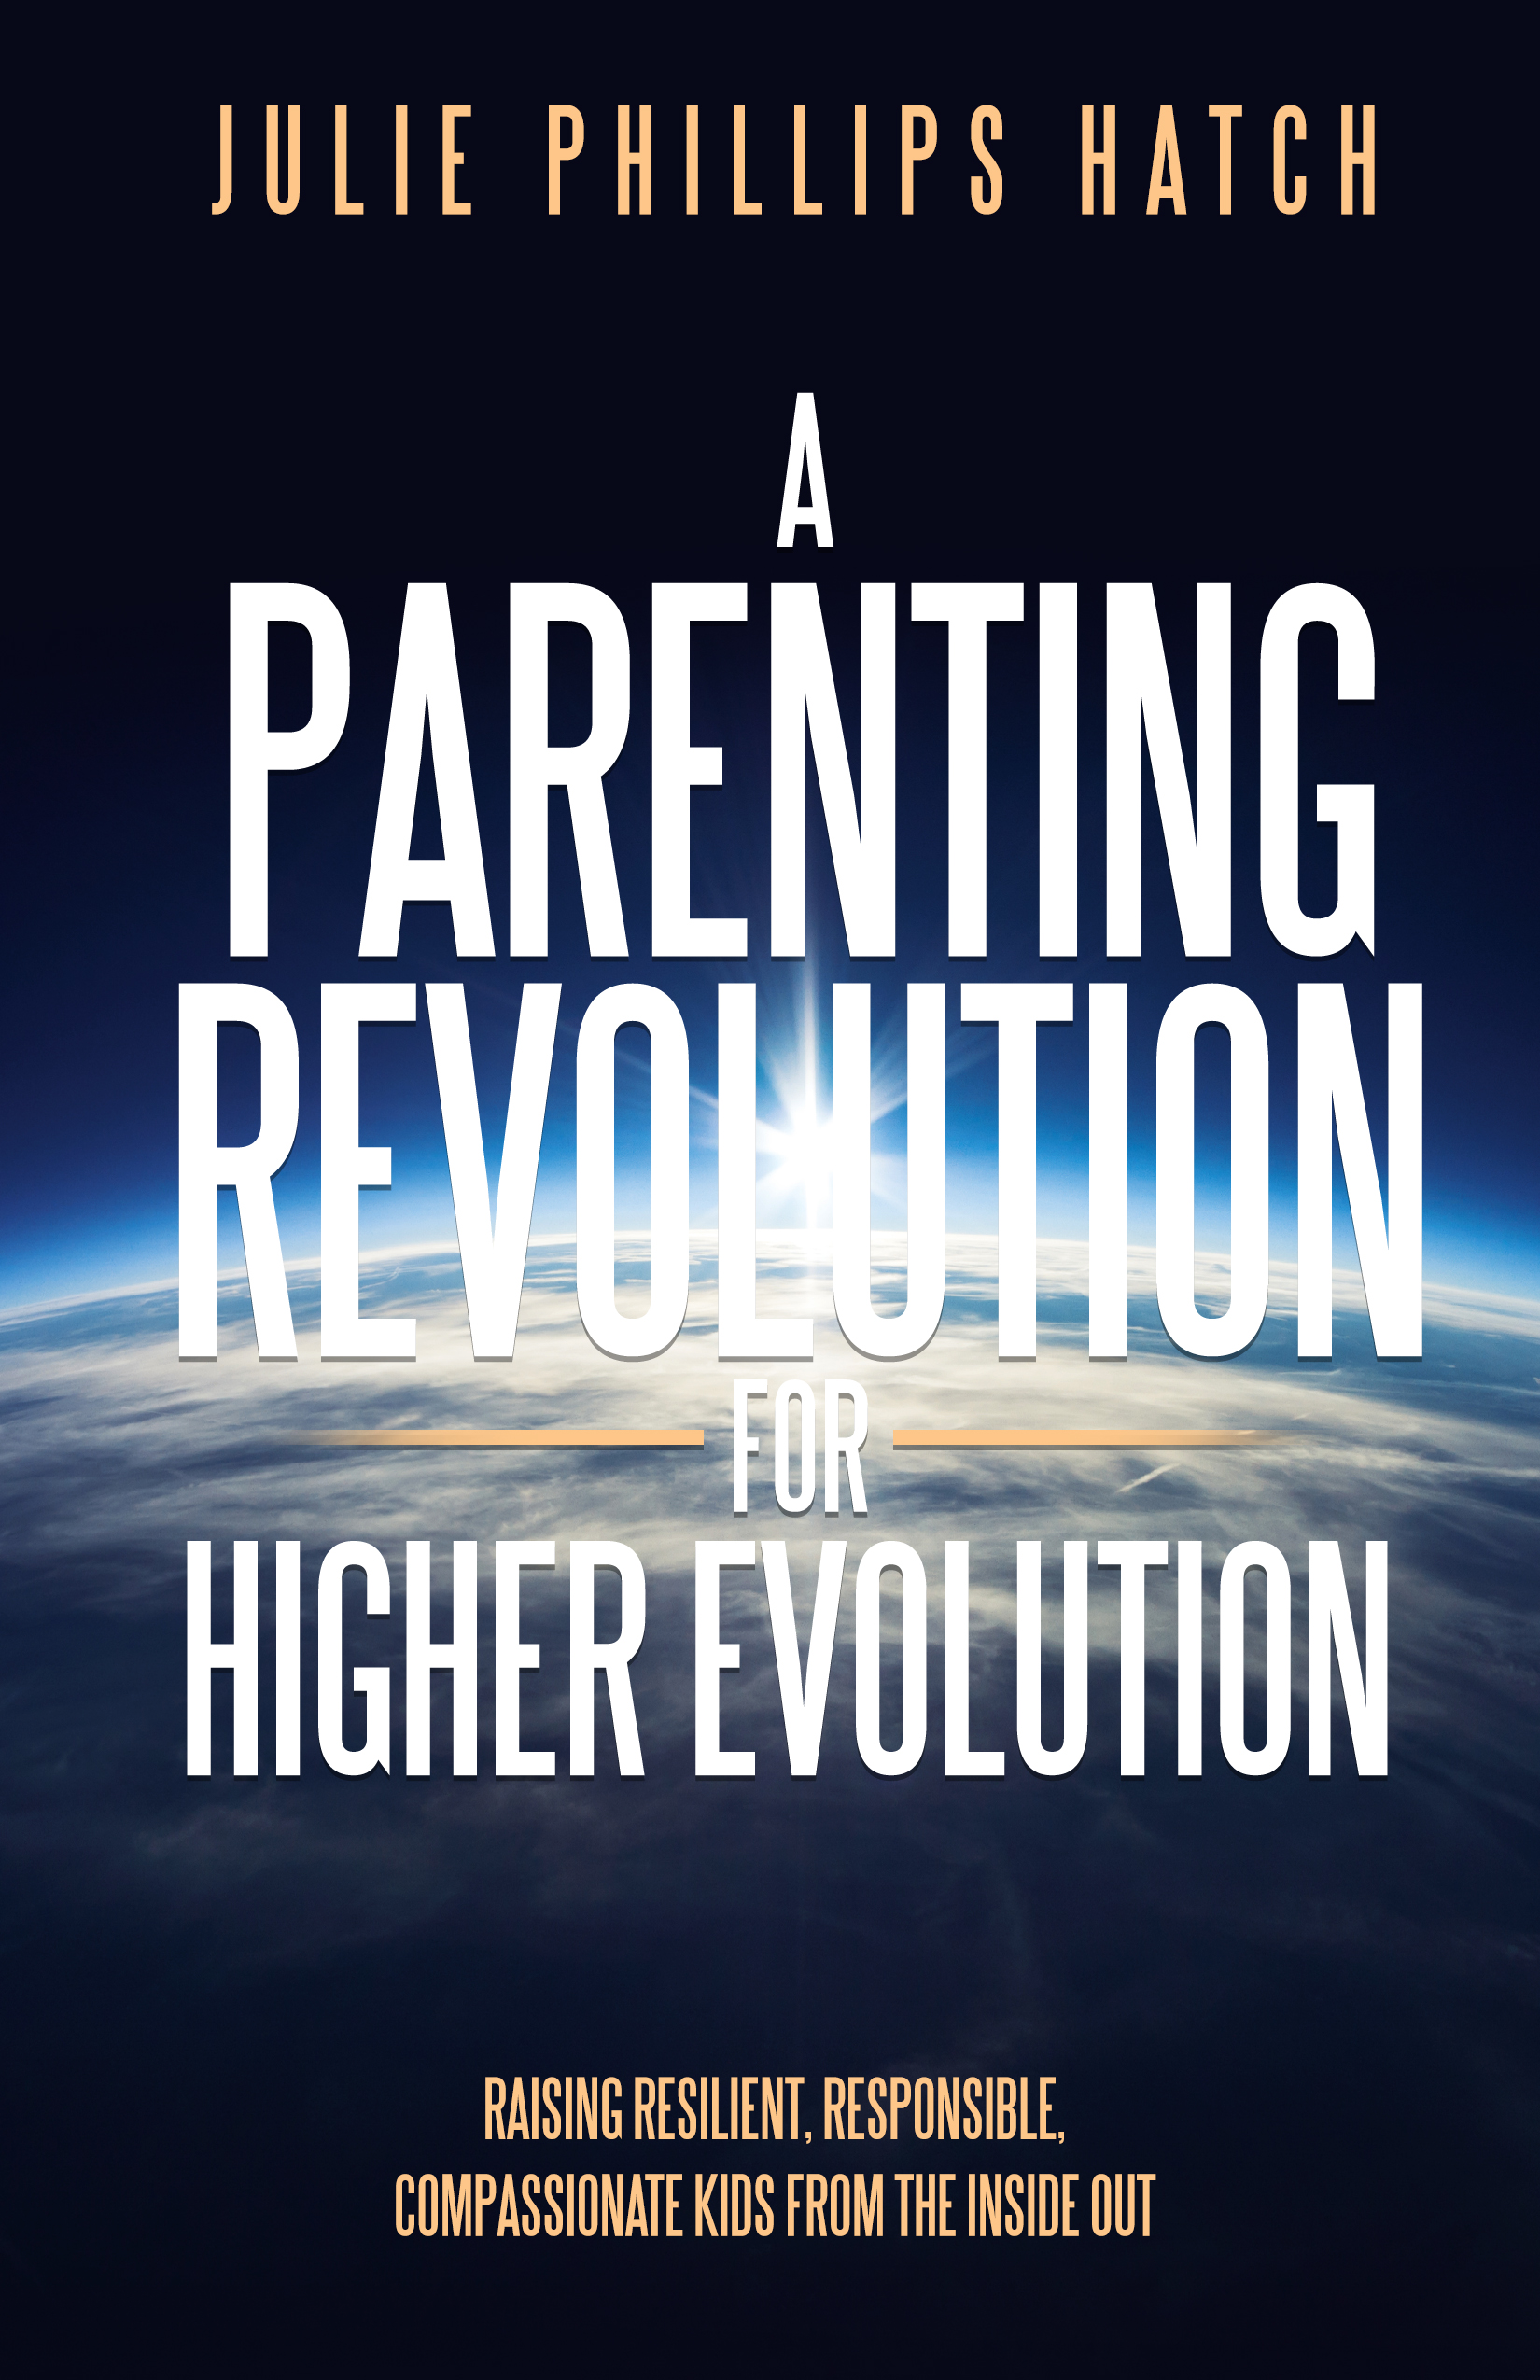 Parenting Revolution with Julie Phillips Hatch